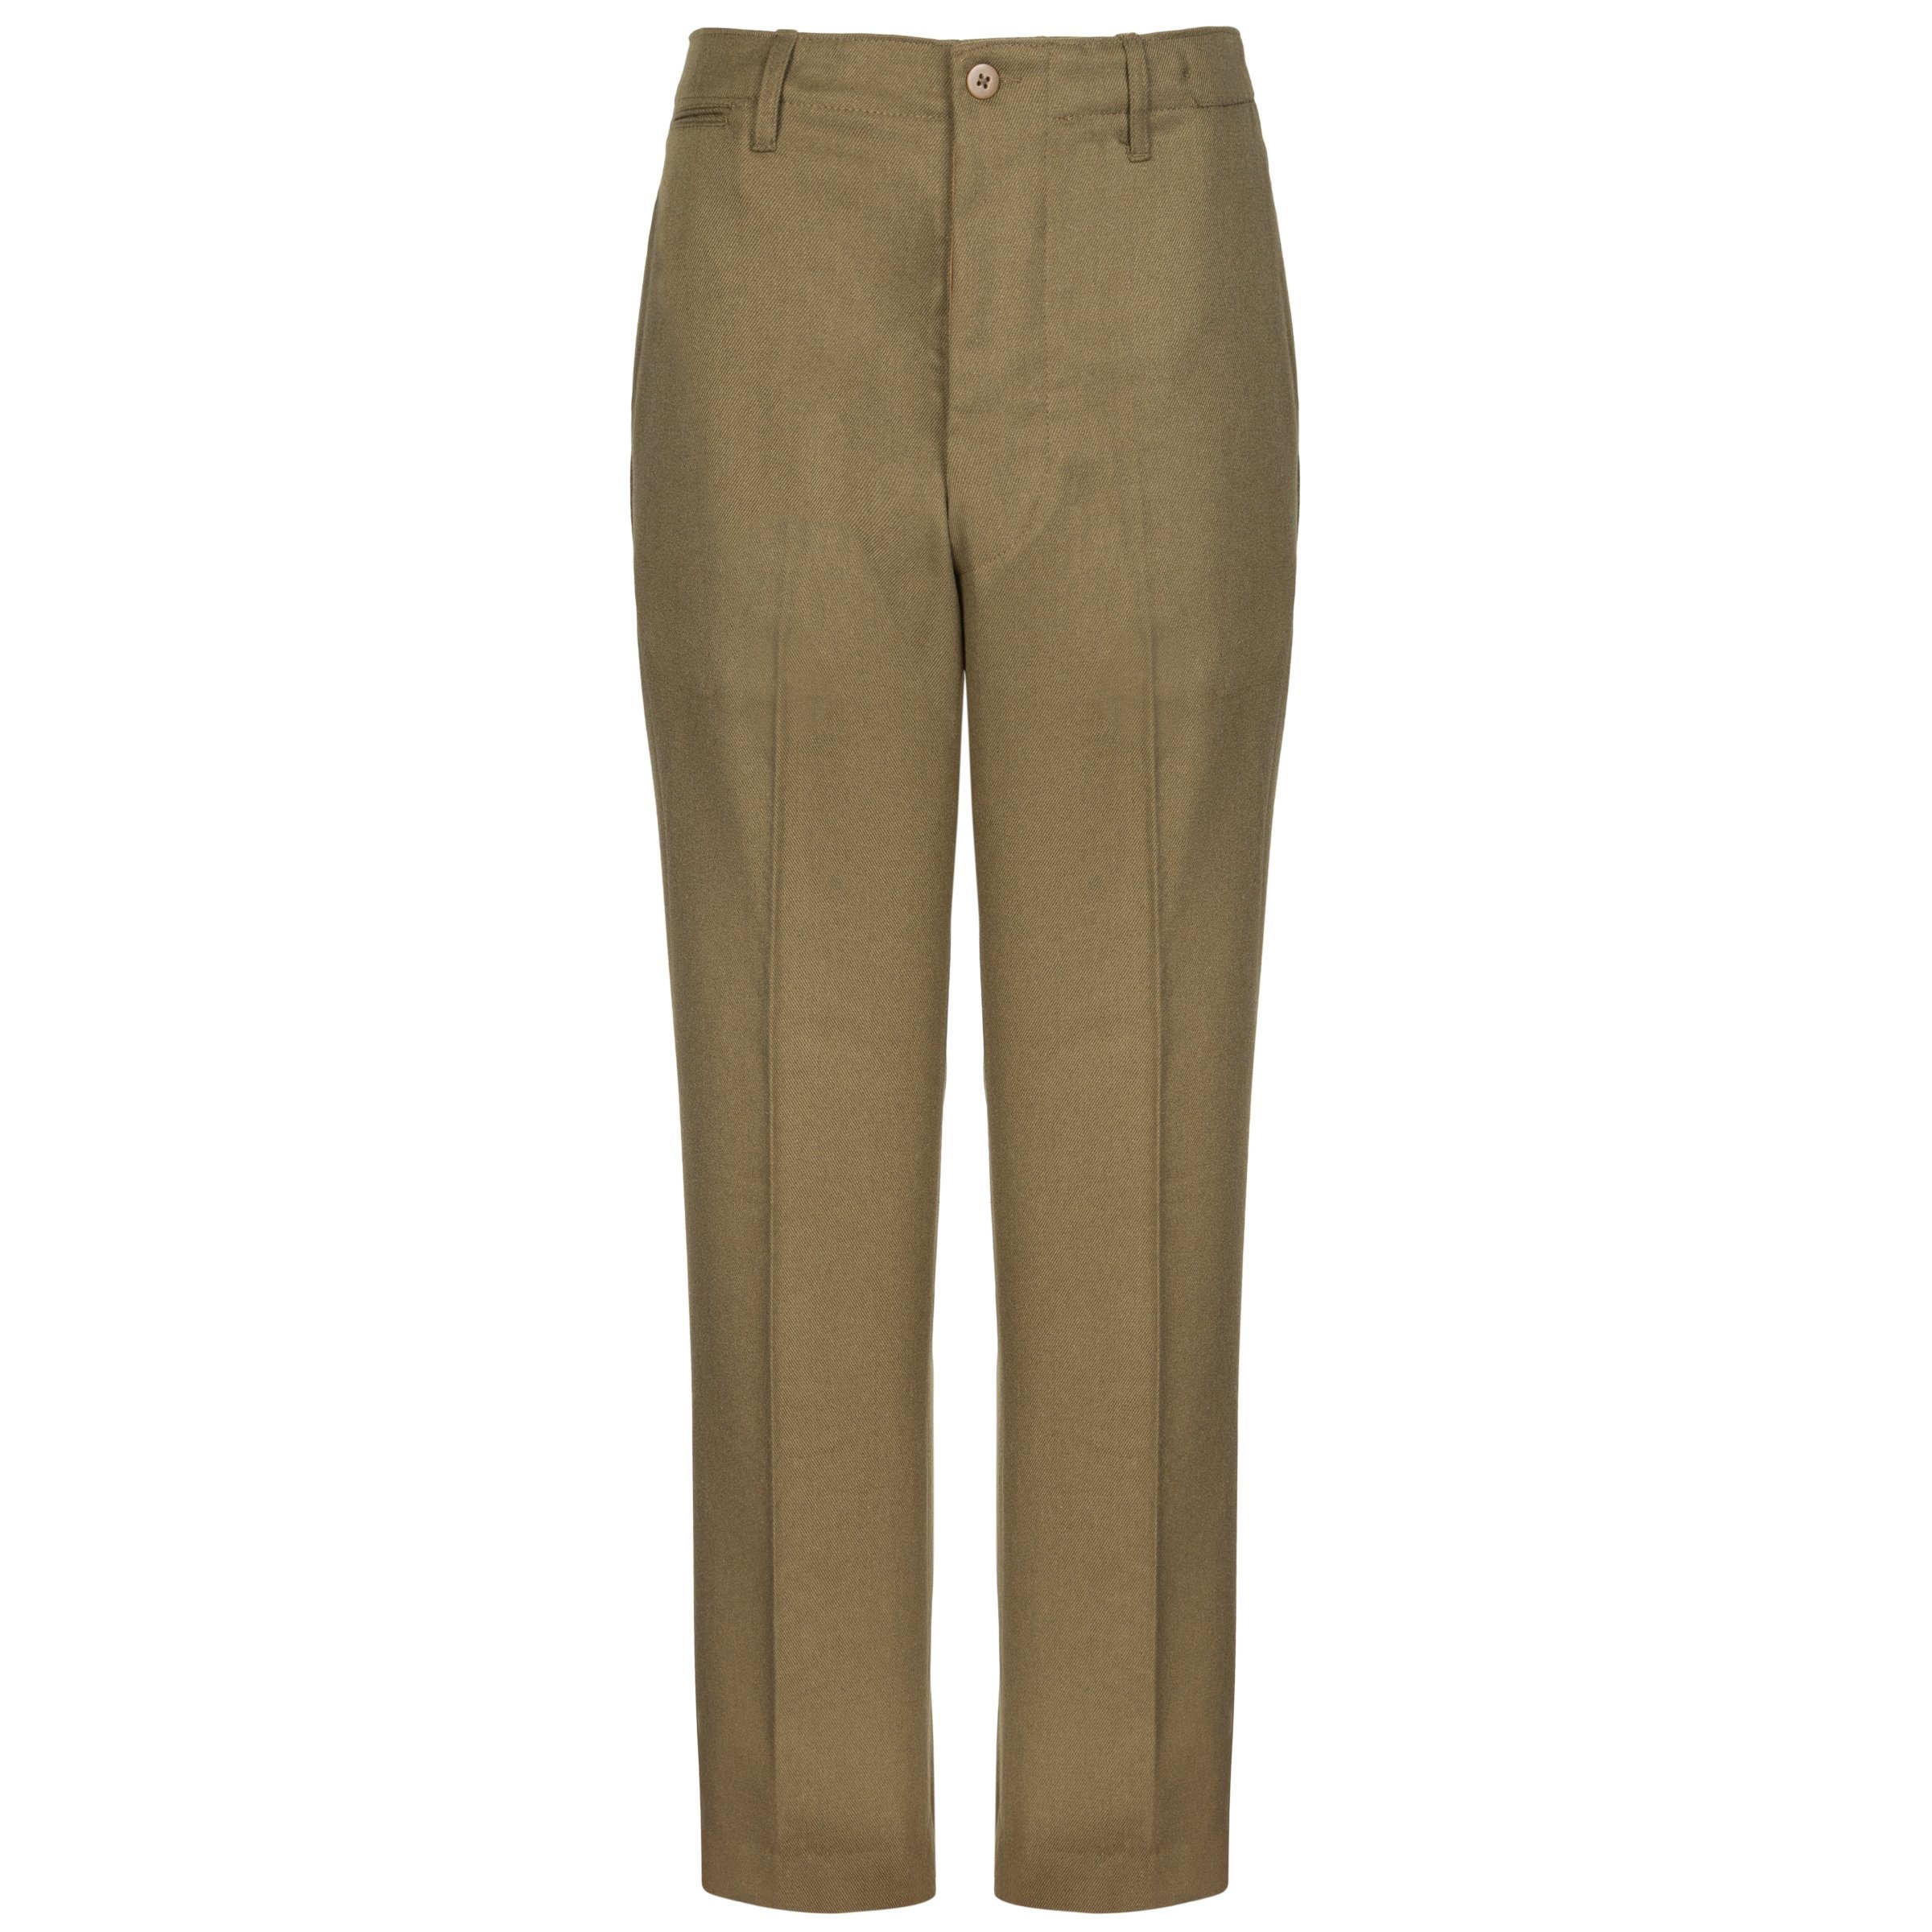 U. S. M-1937 mustard trousers - repro 32 73,75 € | Nestof.pl